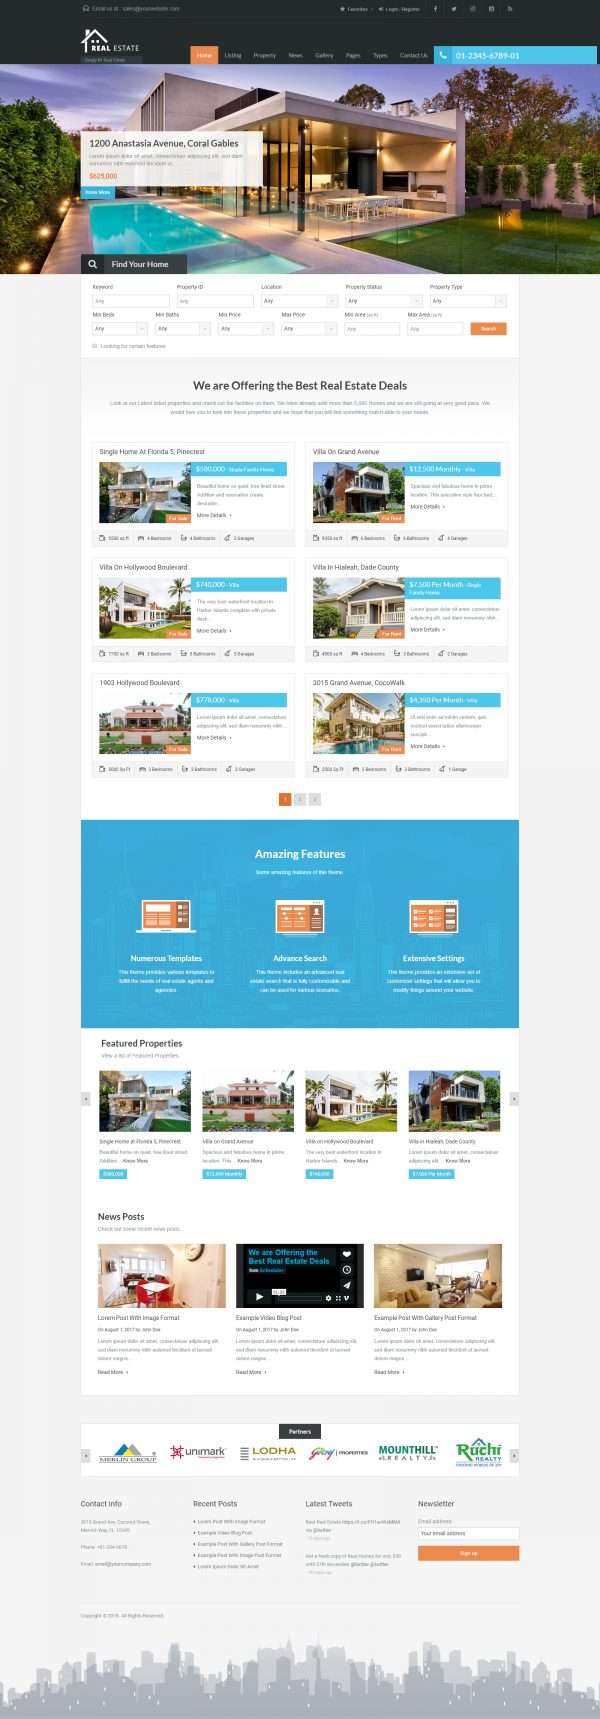 Real Estate website template